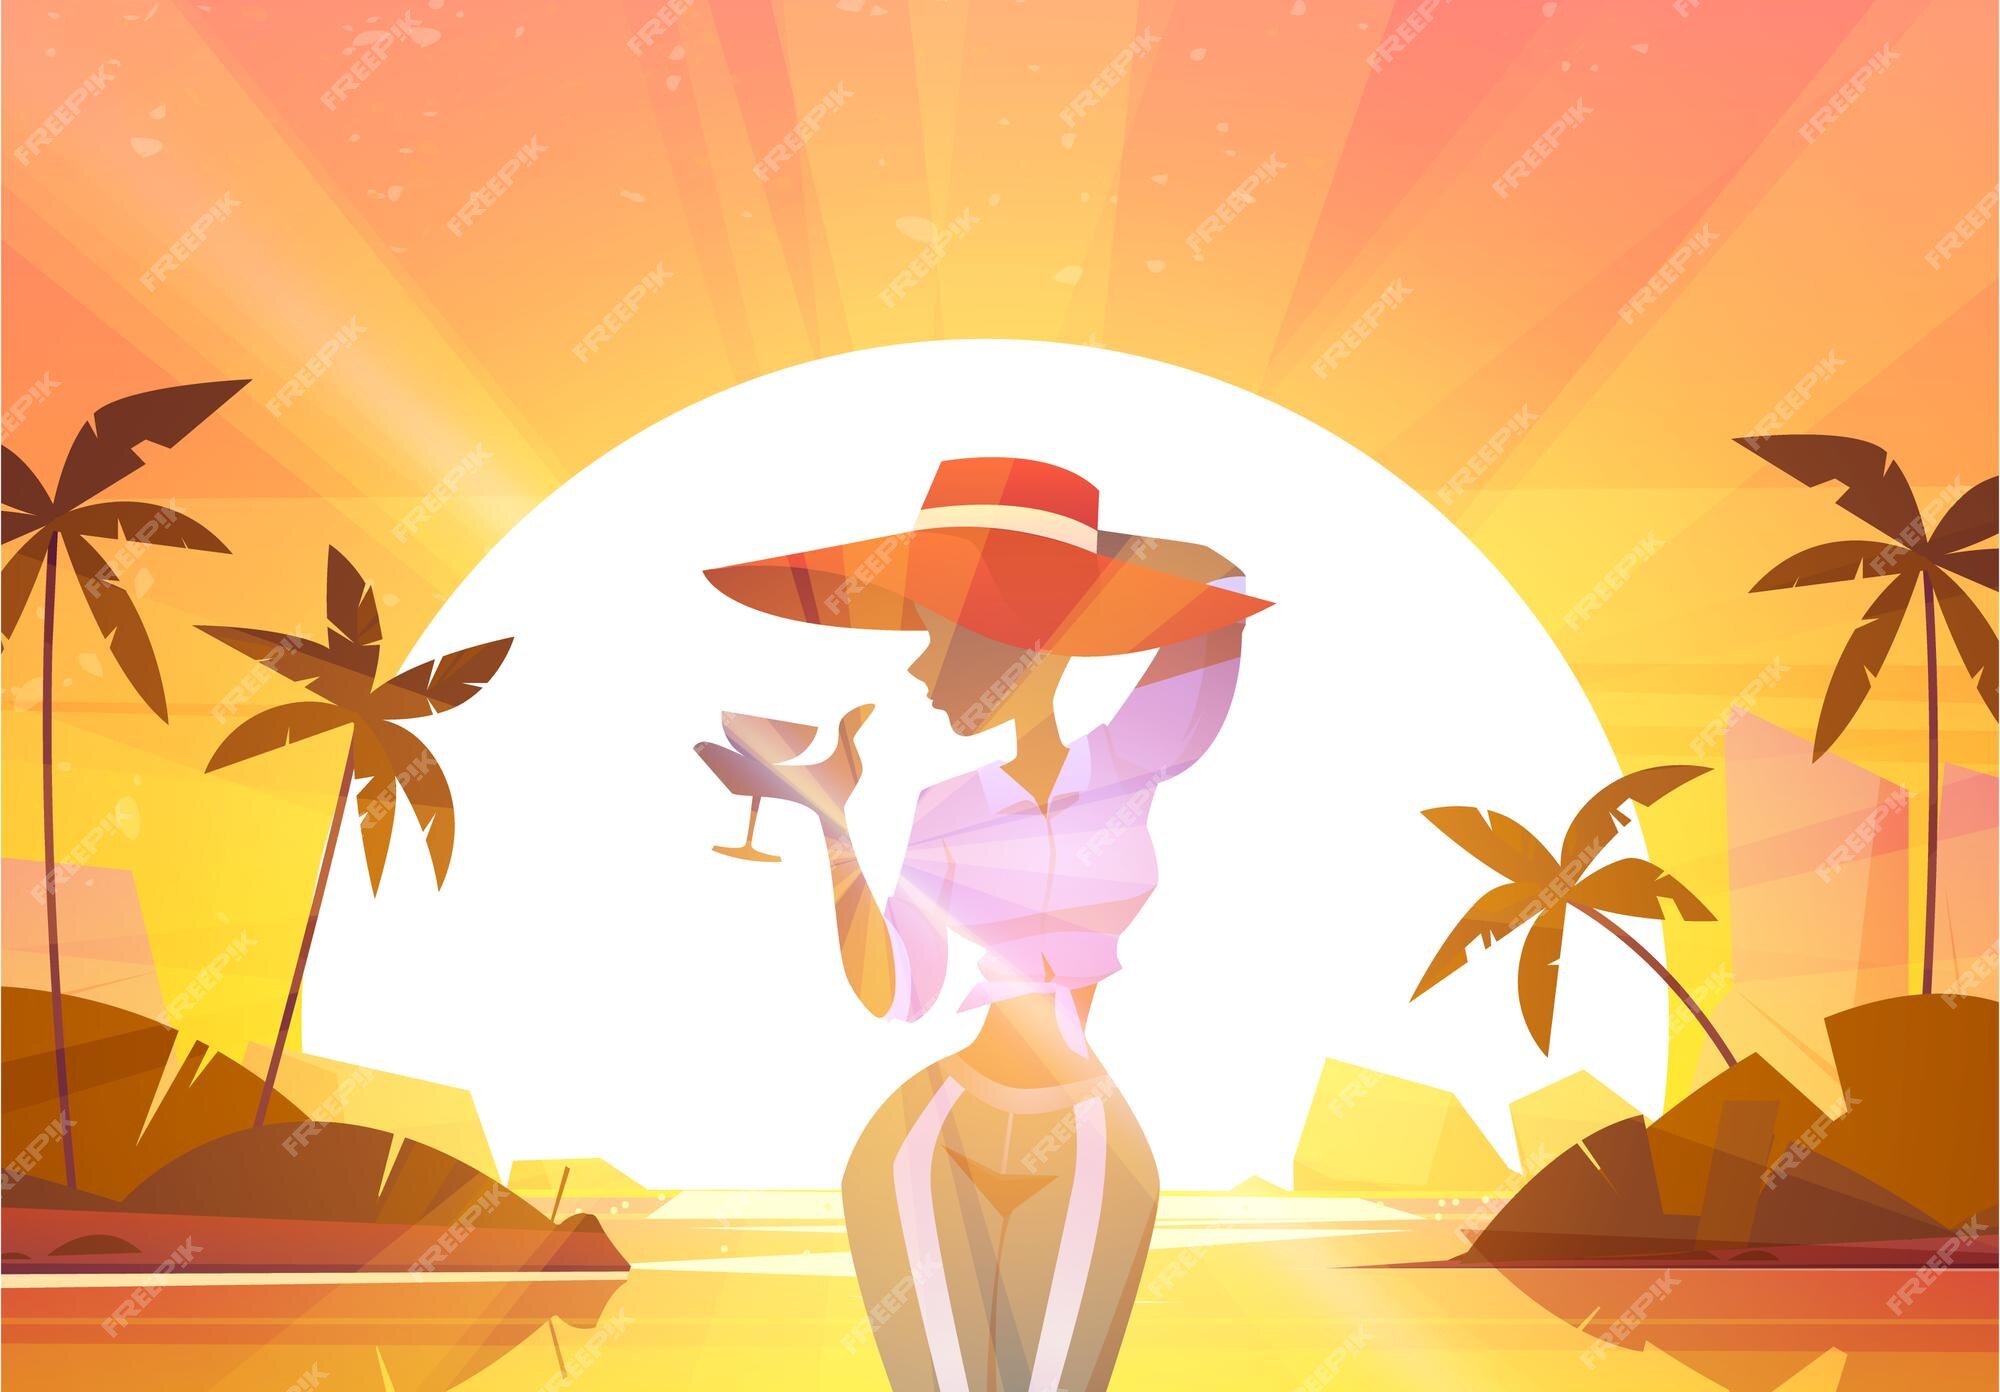 Woman sun Vectors & Illustrations for Free Download | Freepik